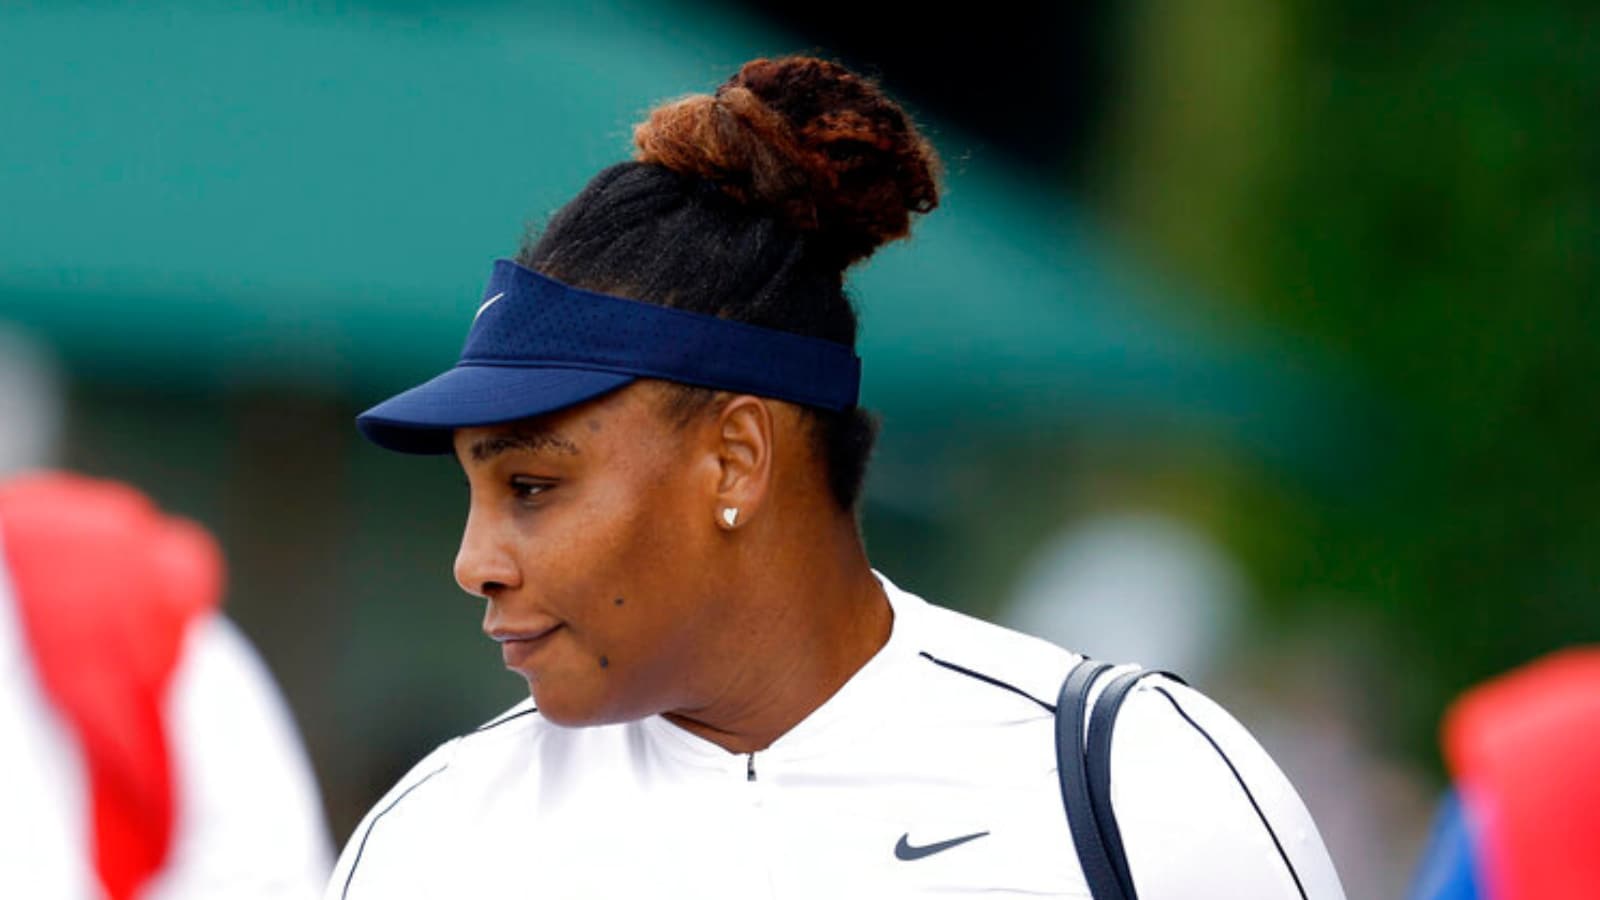 Serena Williams to Play Toronto WTA, Confirm Organisers